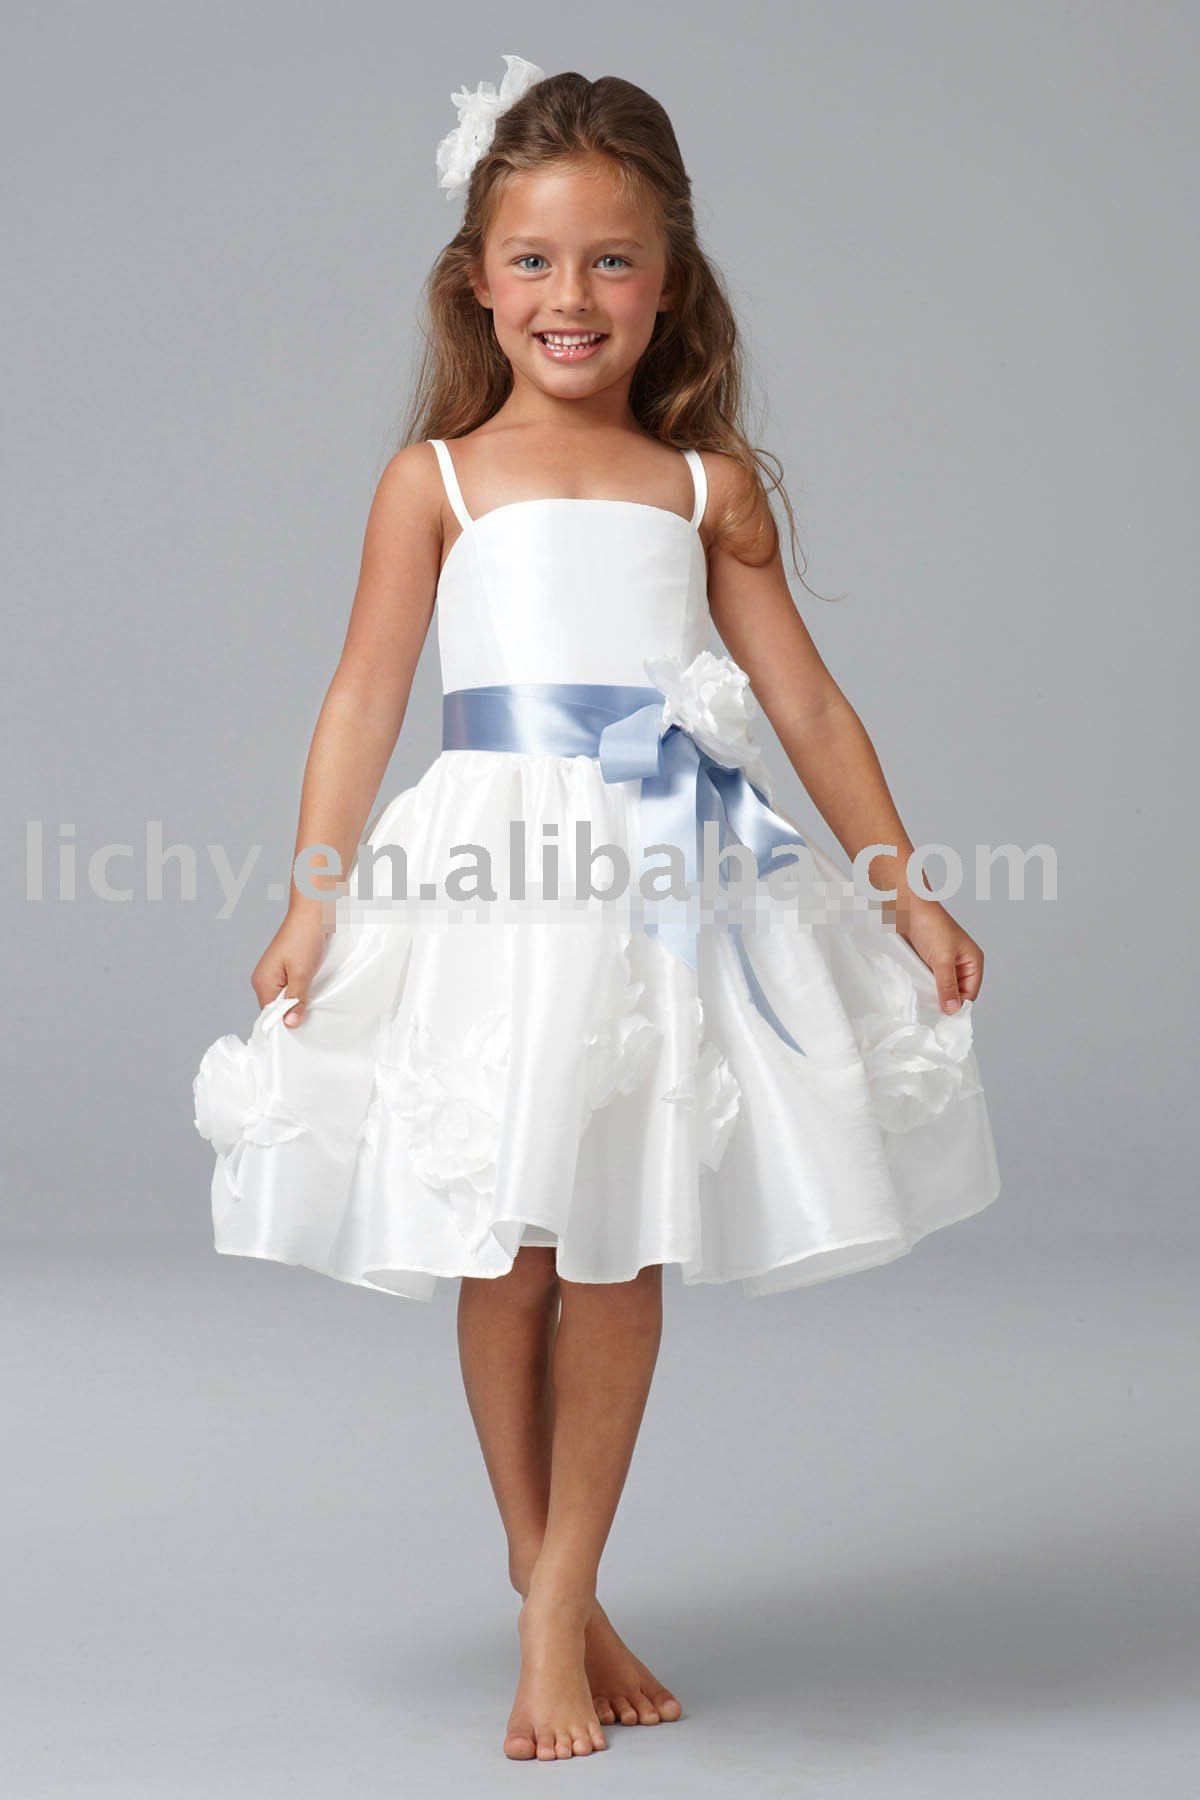 2010 Popular Childern Dress , Top Quality Flower Girl Dress , Flower Childern's Dress For Wedding lya8255